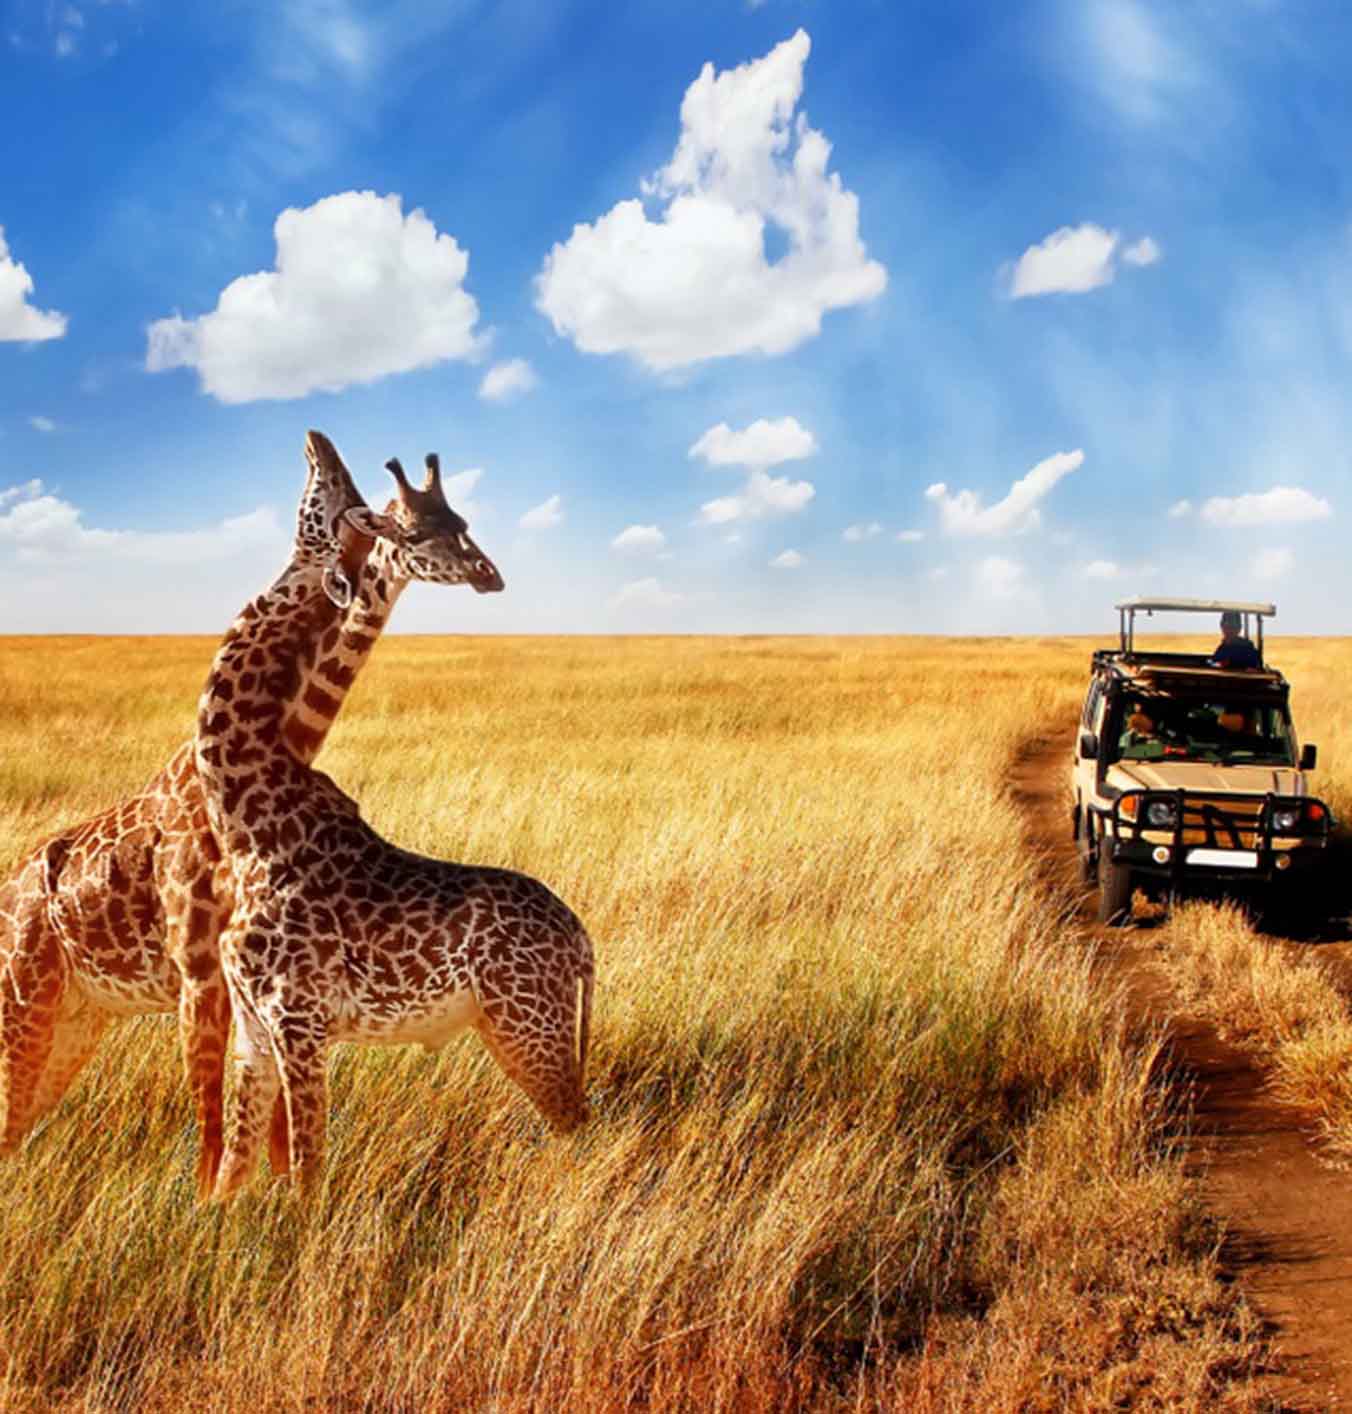 A wilderness safari in Zimbabwe & Botswana